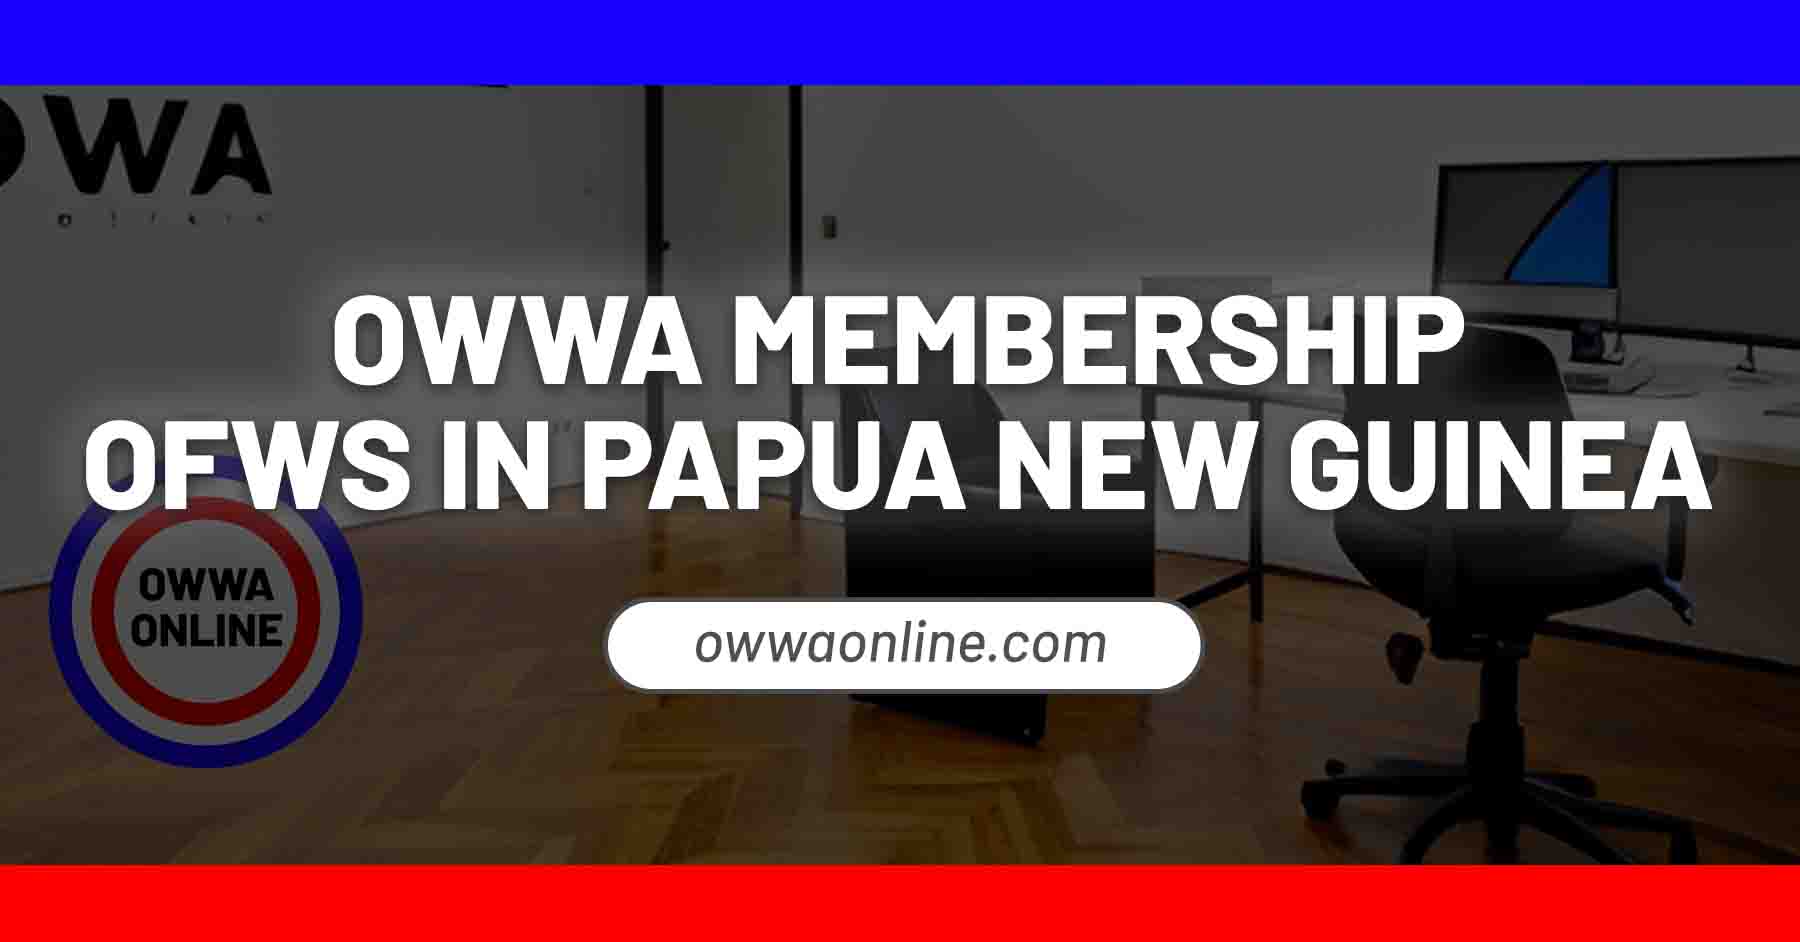 owwa membership application and renewal in papua new guinea